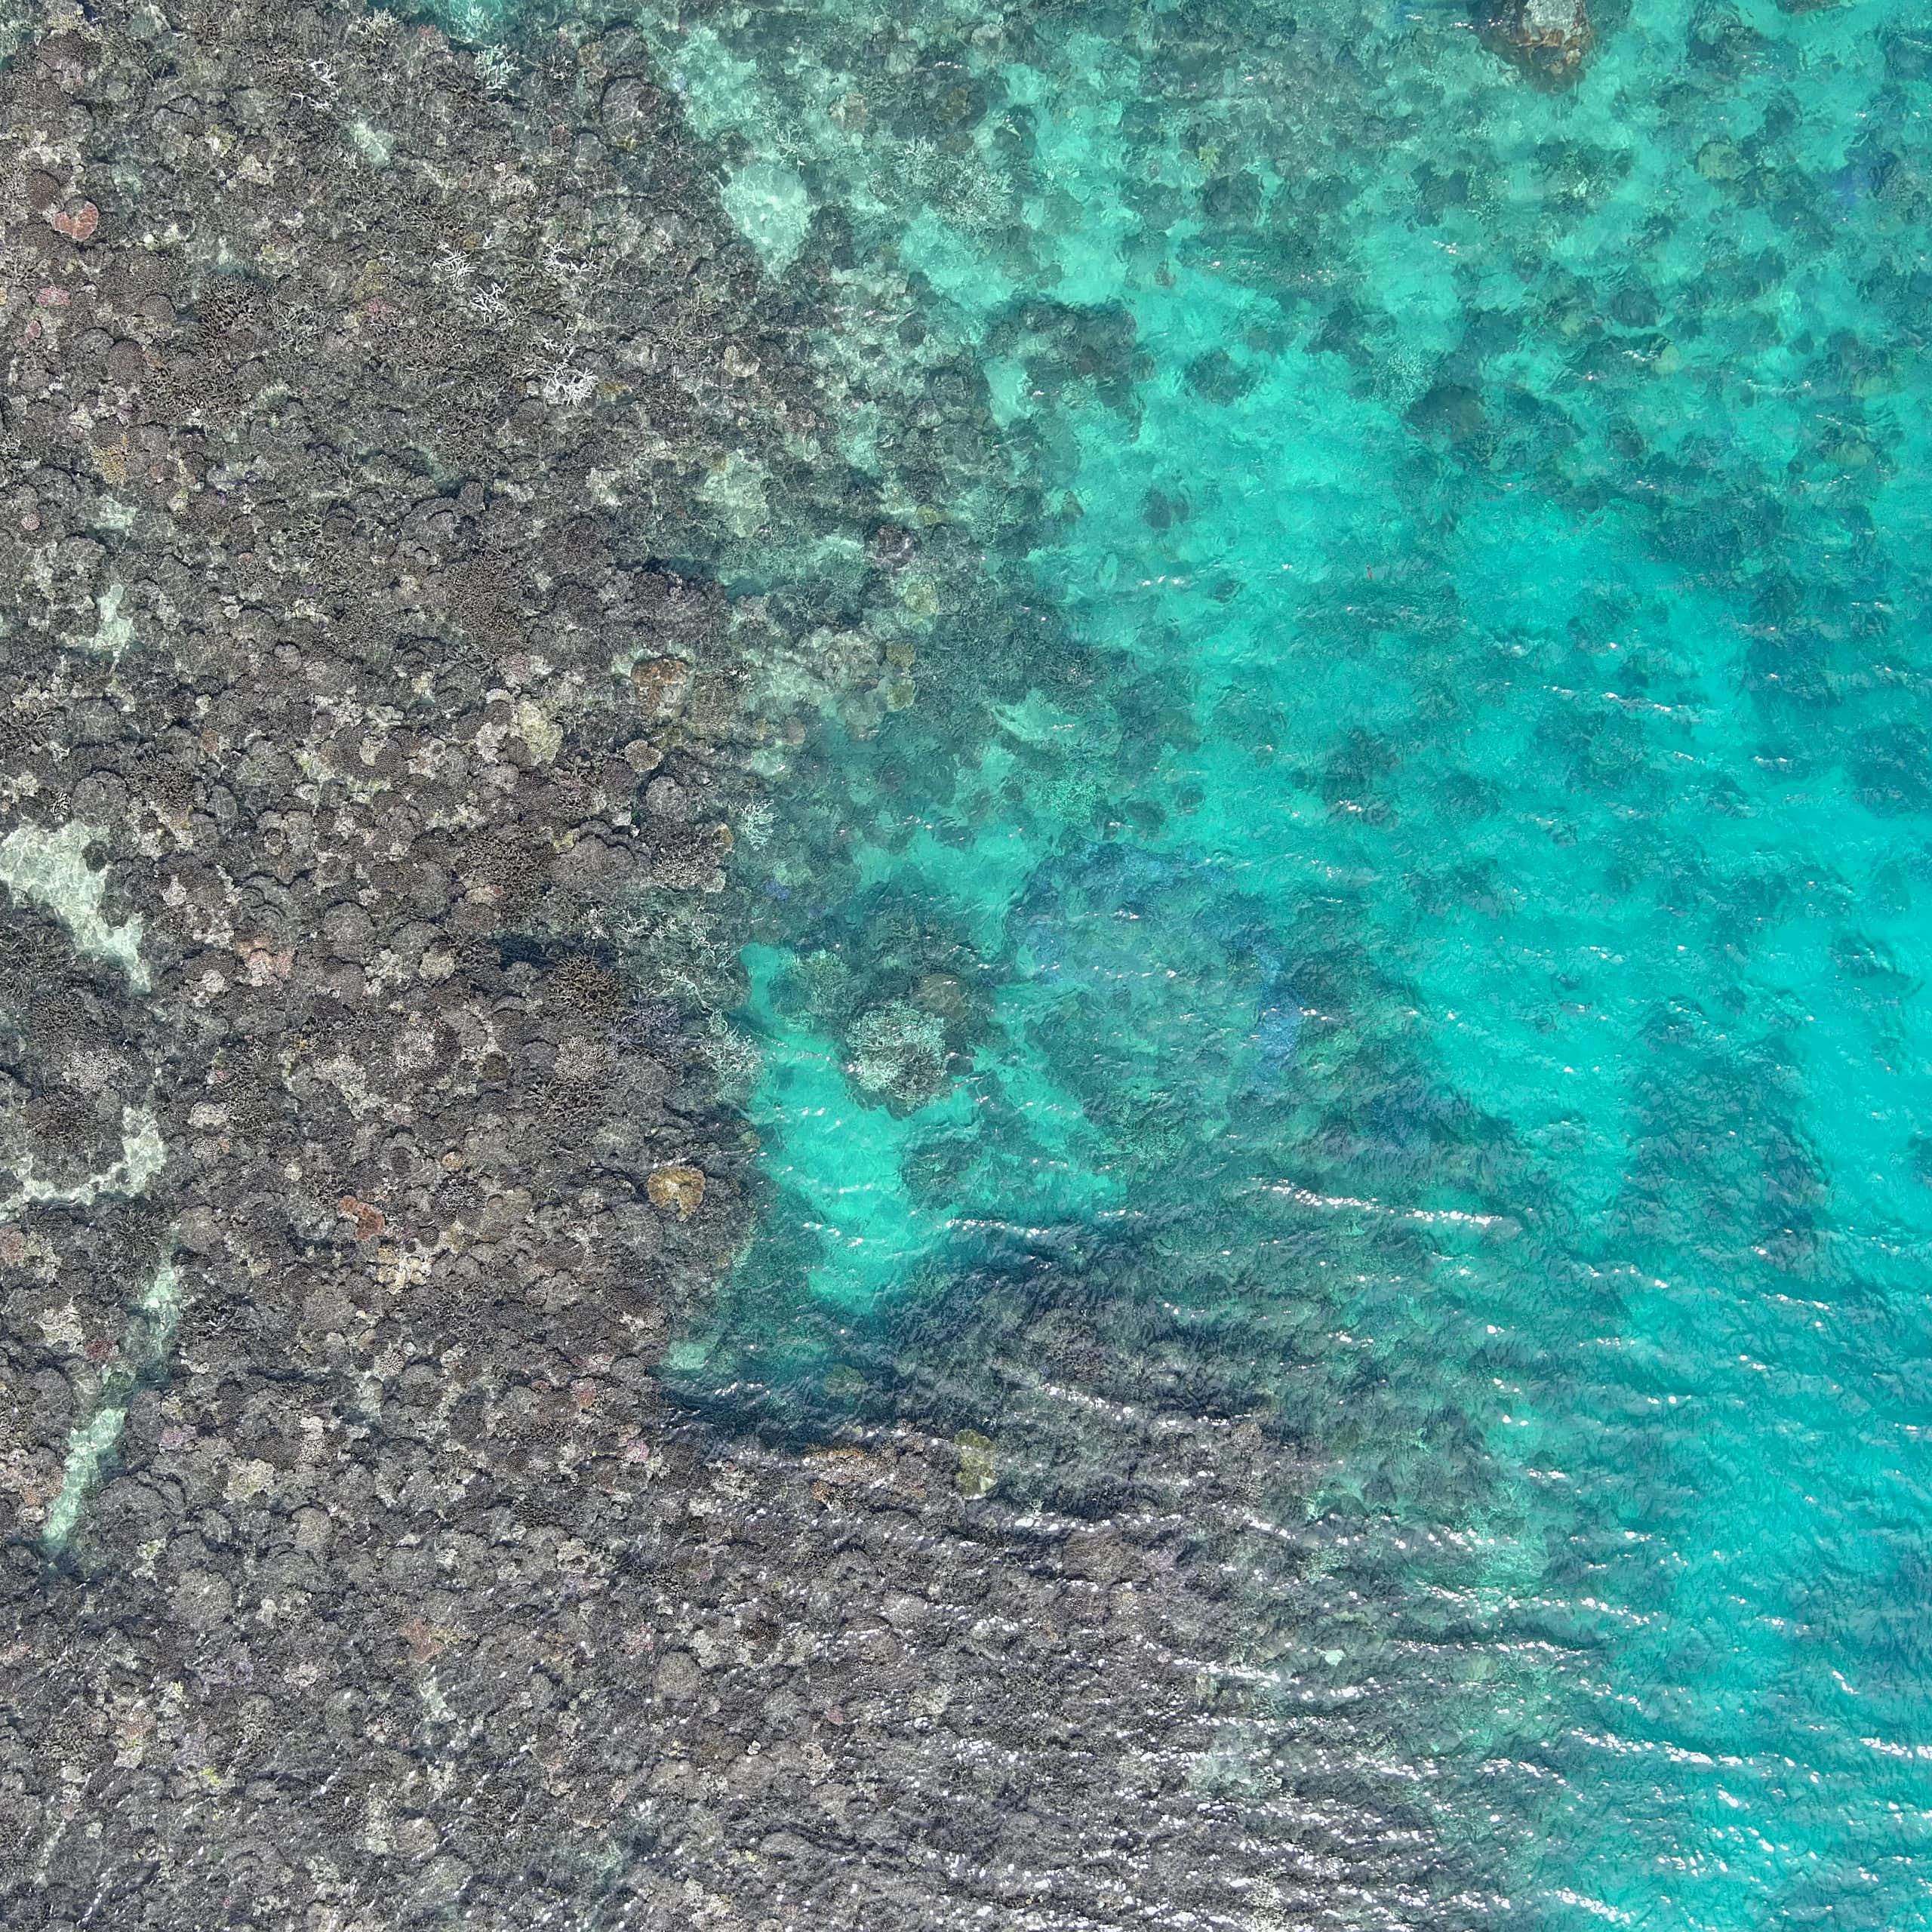 dead coral in shallow sea